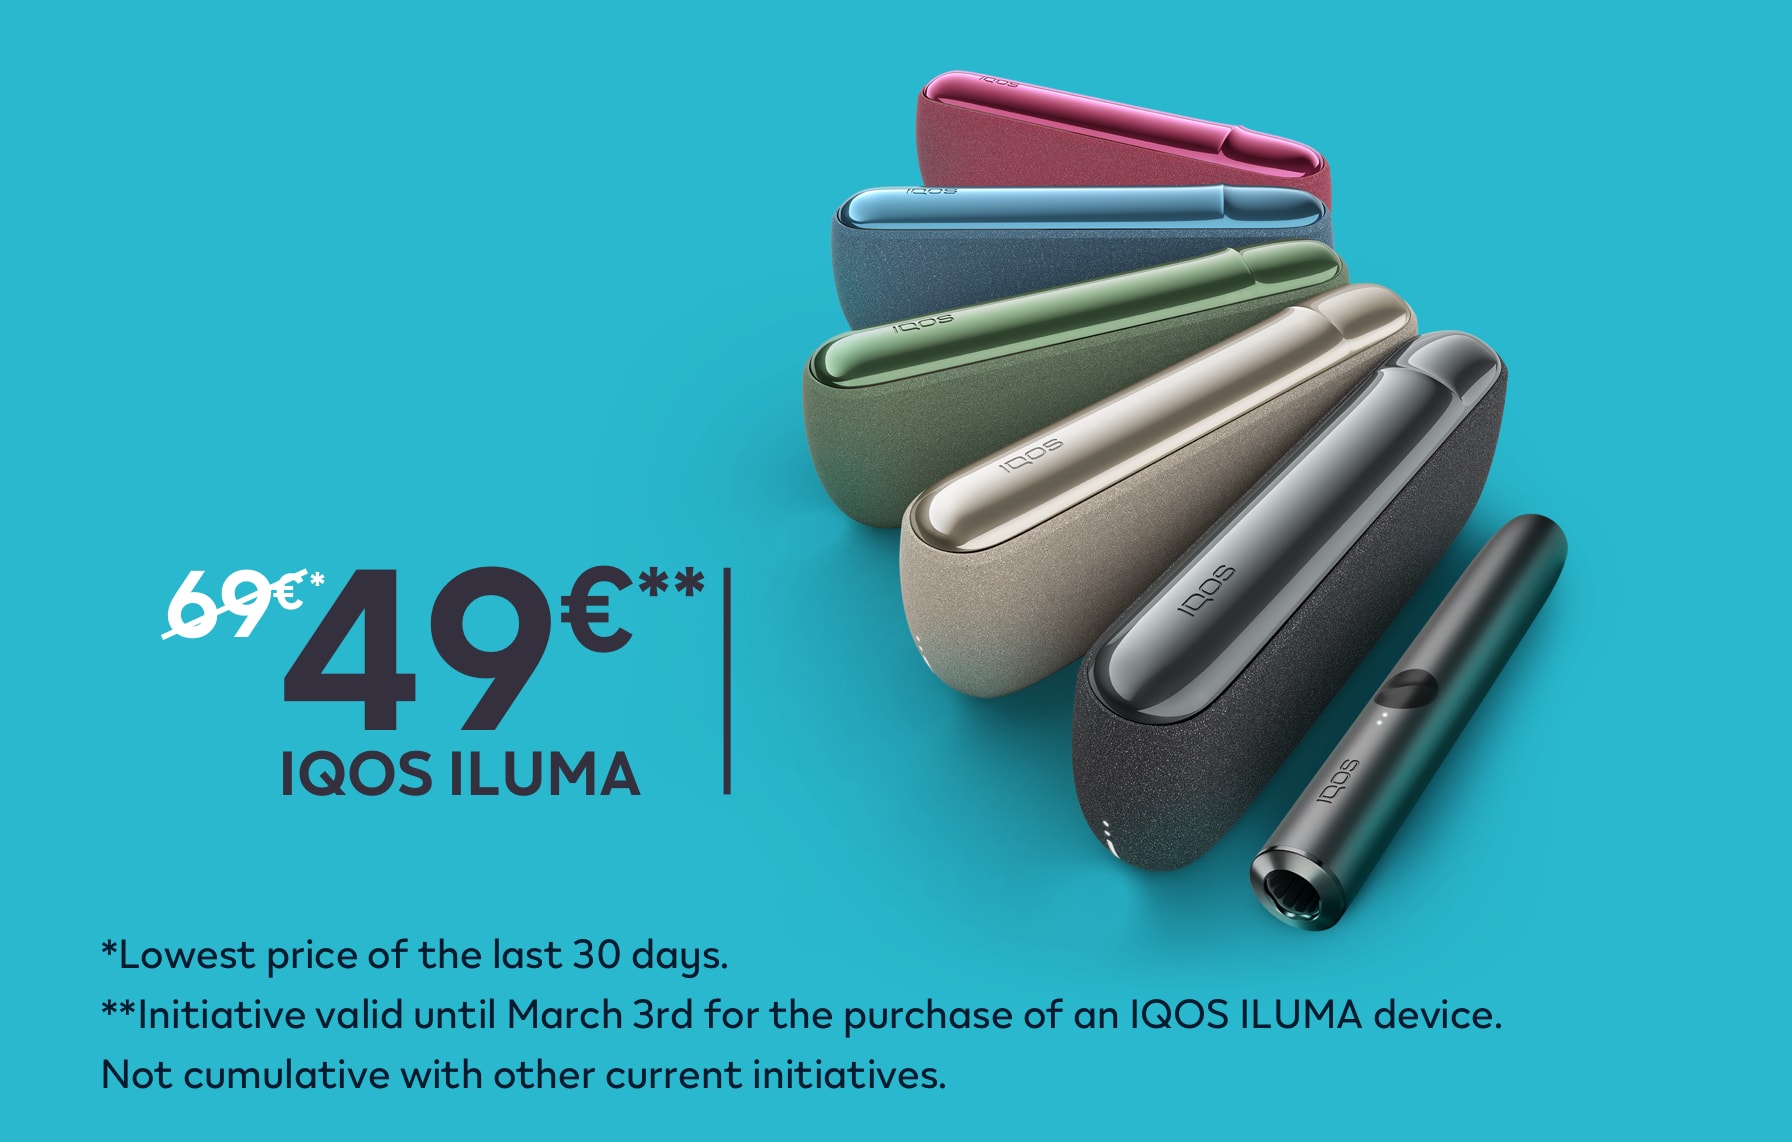 IQOS Iluma Prime - Jade Green - Buy Online